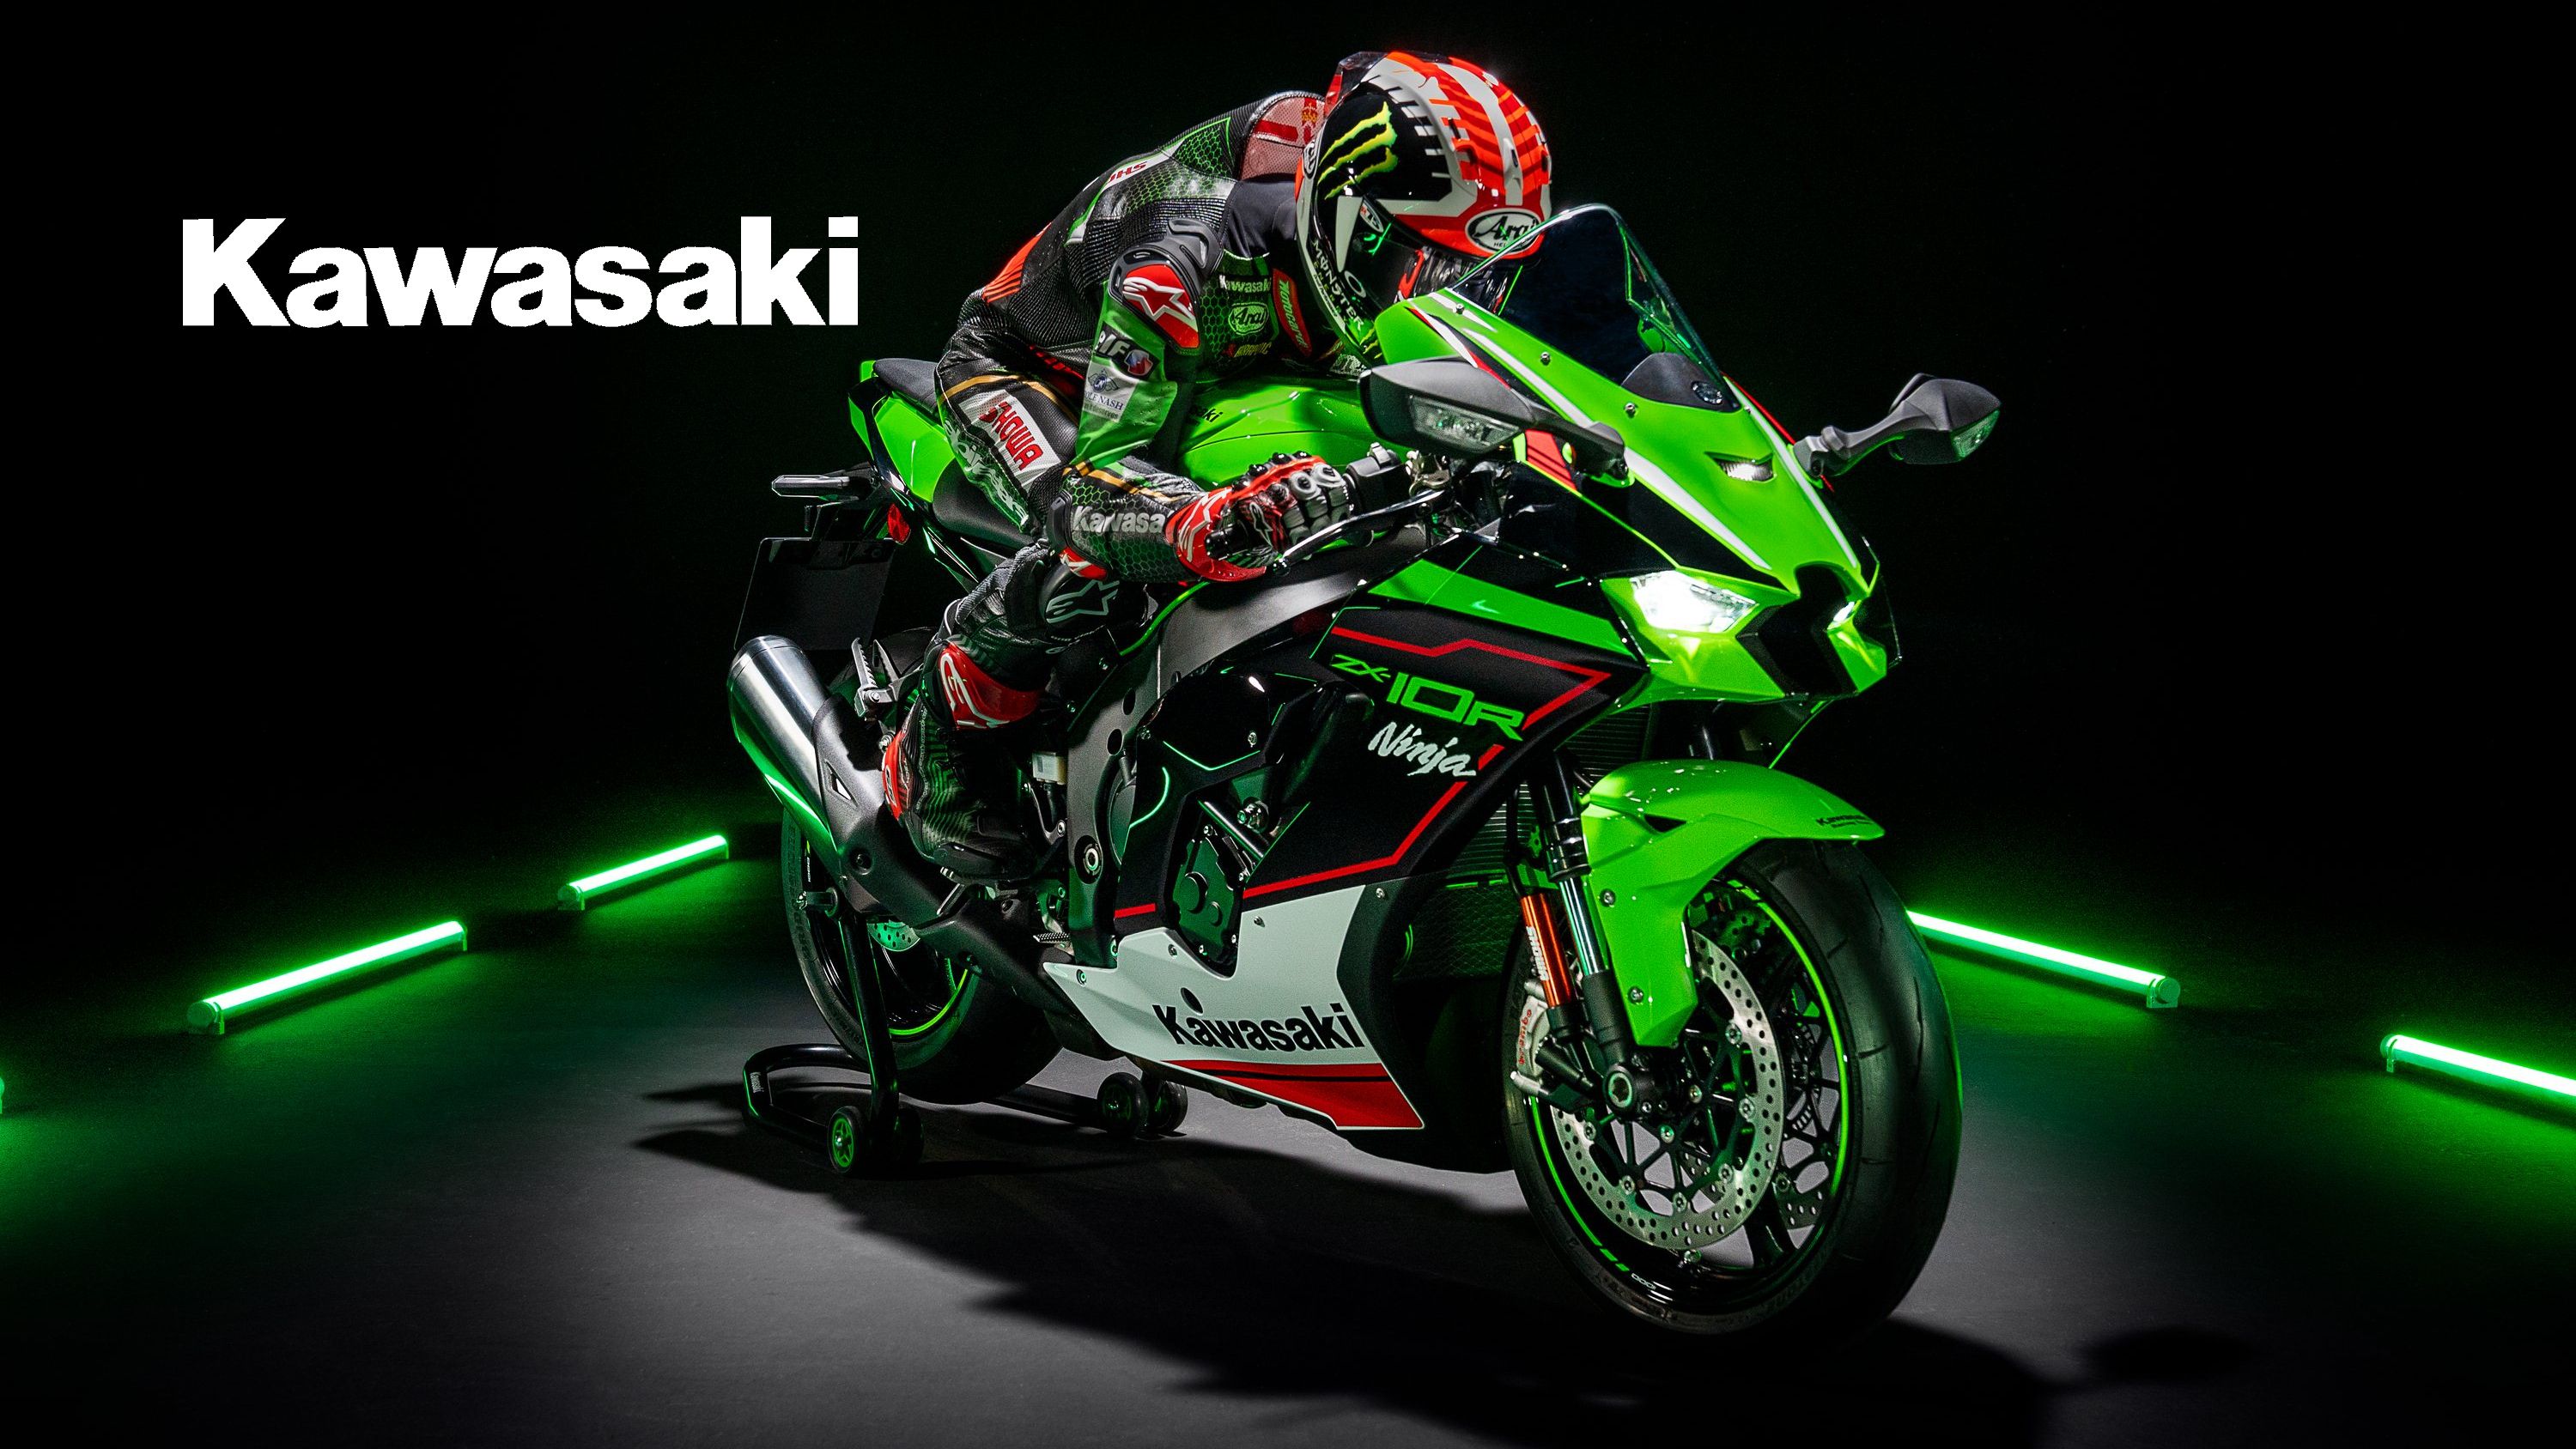 https://all-images.net/wallpaper-iphone-design-hd-472/ wallpaper iphone  design hd - 472 Check more at https://… | Kawasaki bikes, Kawasaki  motorcycles, Super bikes